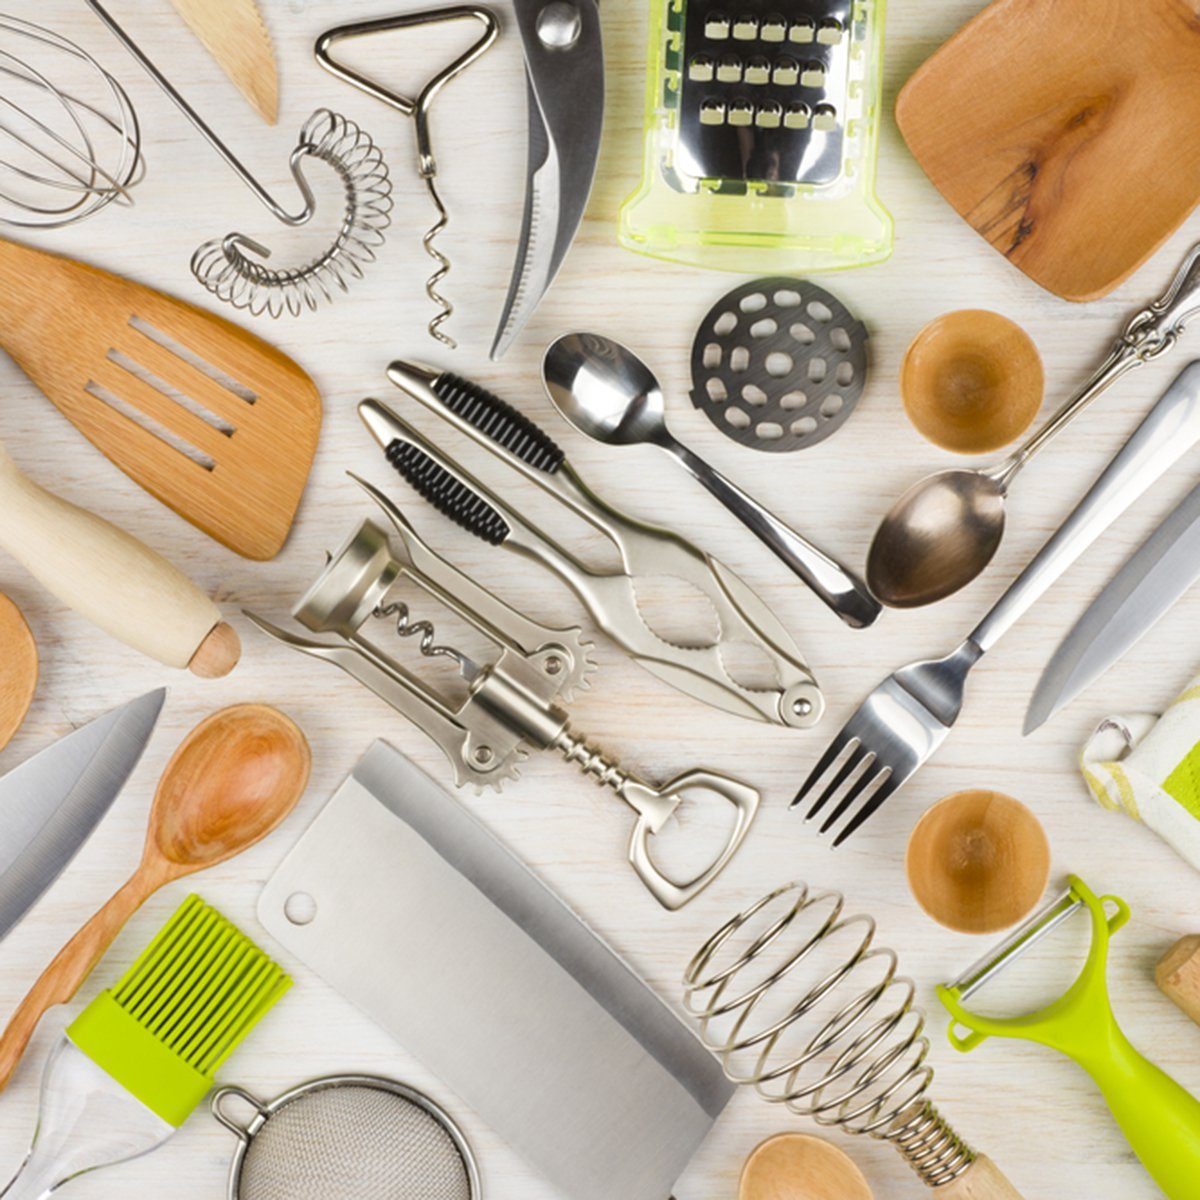 Background of kitchen utensils on wooden kitchen table